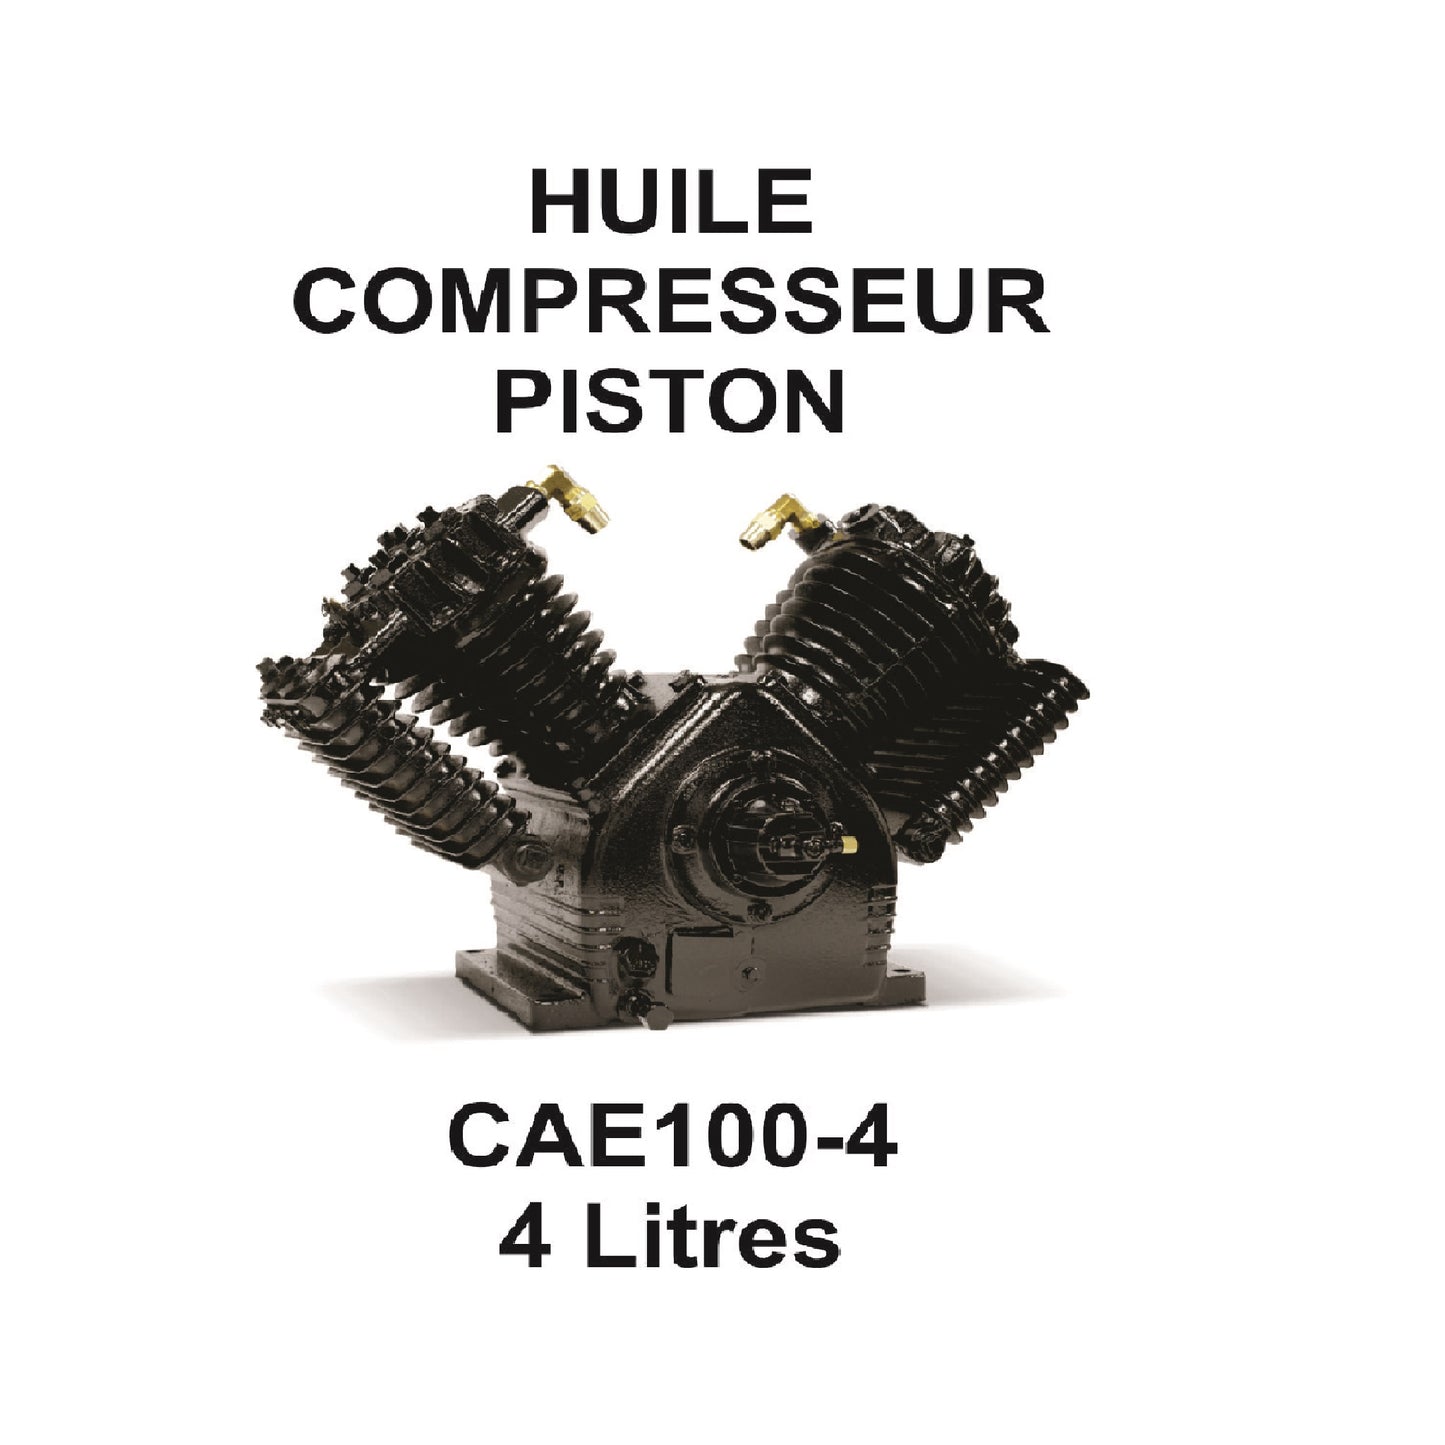 CAE100-4 Huile compresseur pistons 4 litres